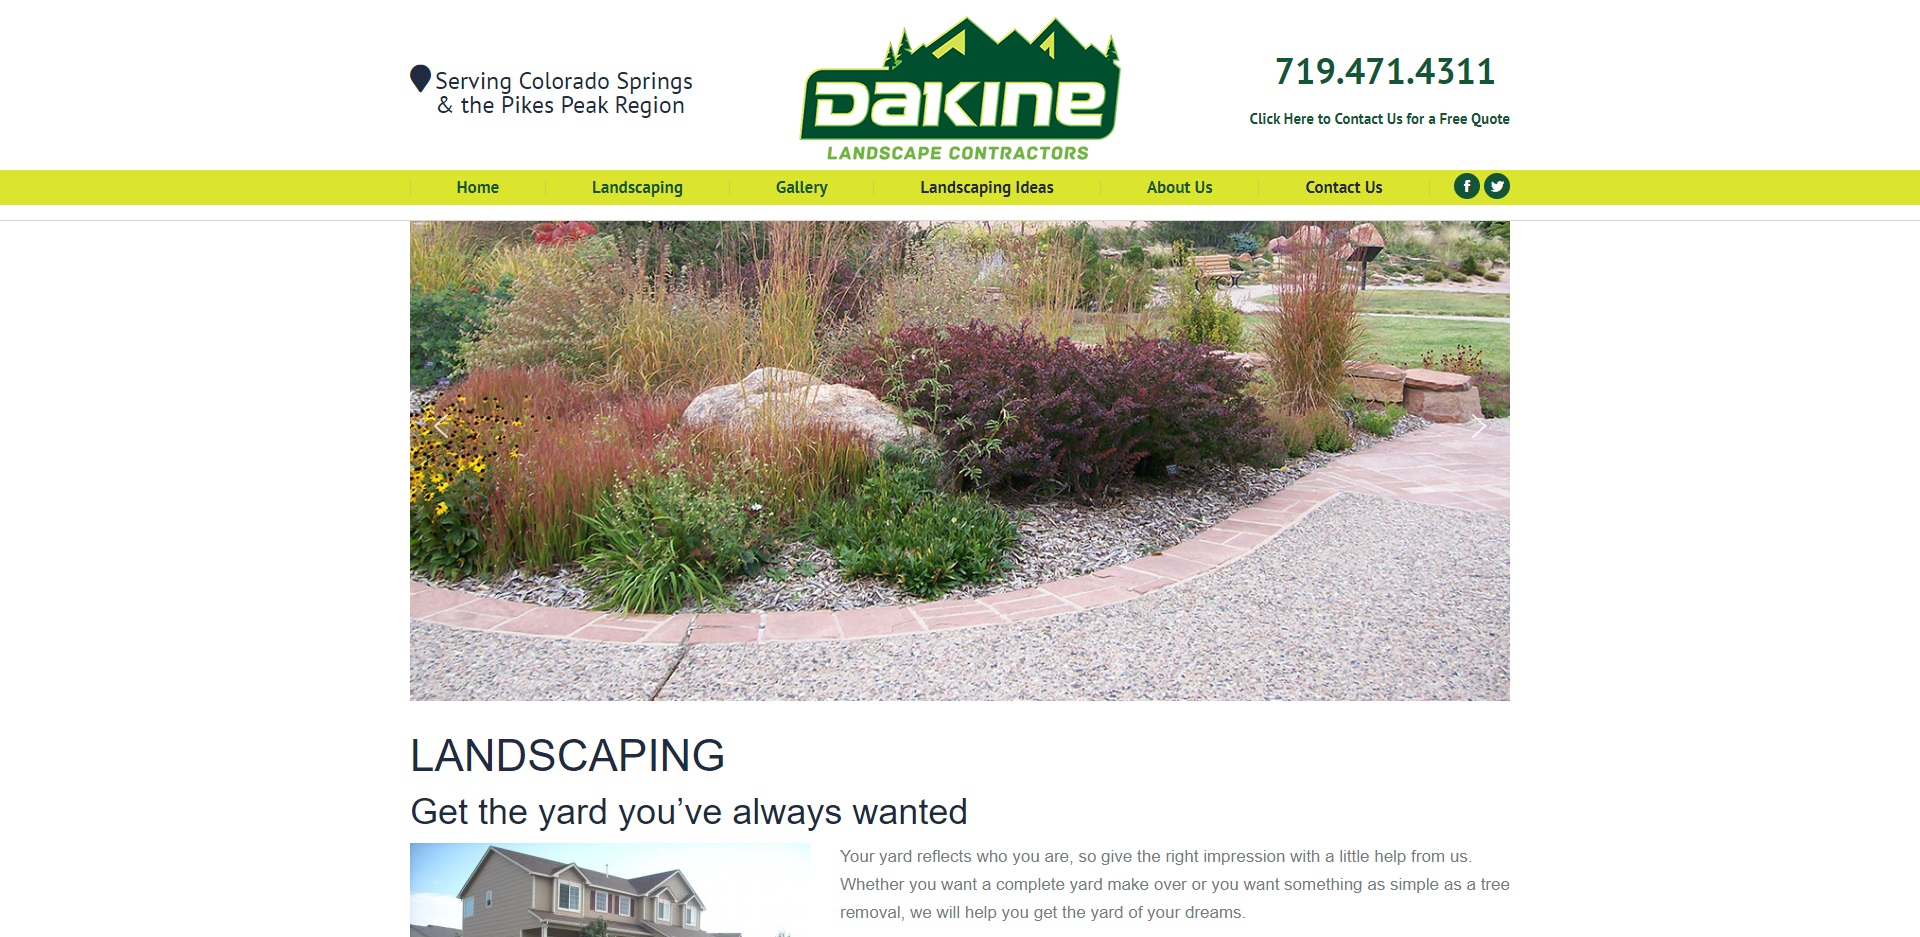 5 Best Landscaping Companies in Colorado Springs, CO